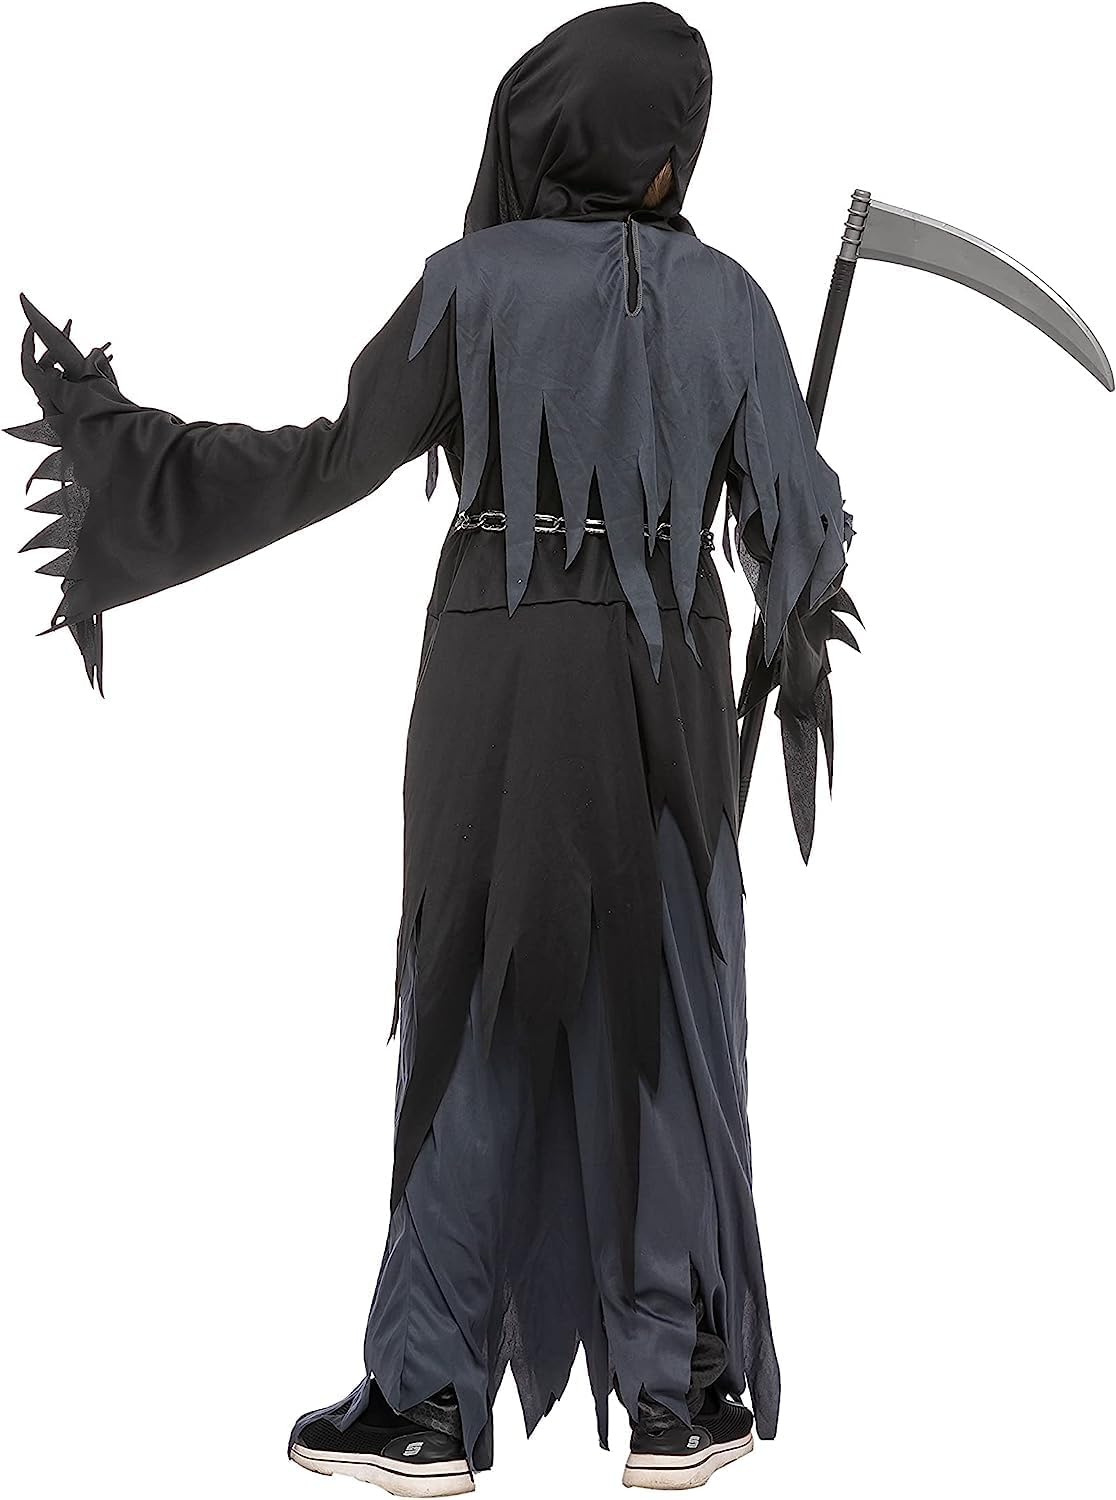 Spooktacular Creations Glowing Eyes Grim Reaper Costume for Kids, Dark Knight Reaper Phantom Costume for Halloween Dress Up-M(8-10yr)